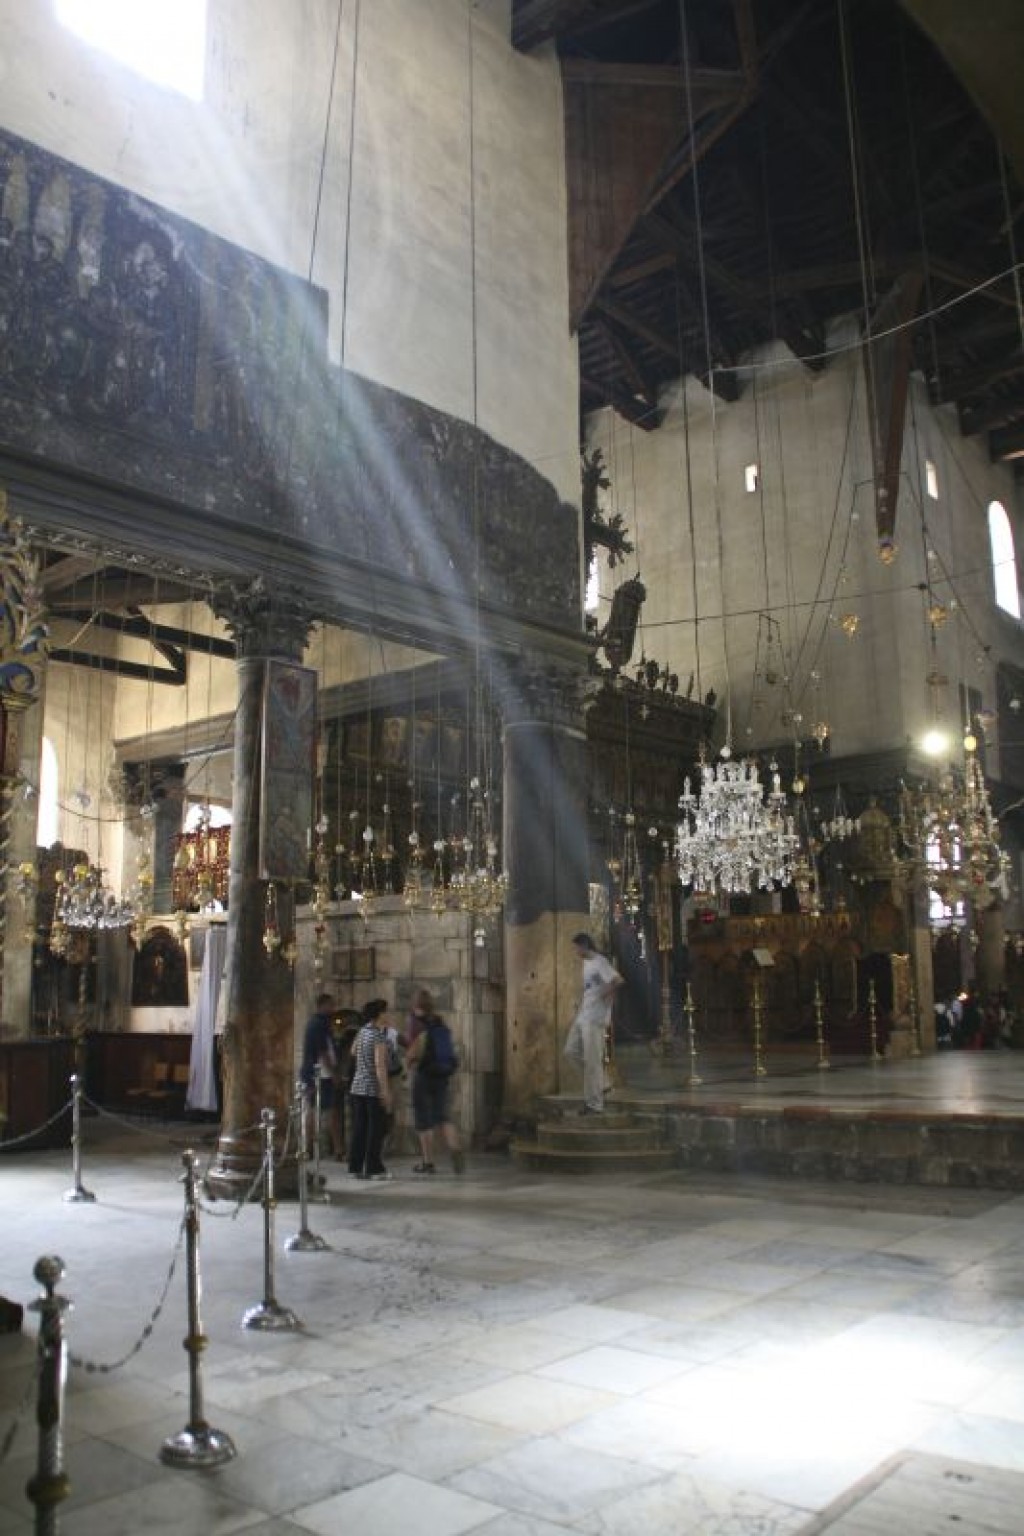 Inside the Basilica of the Nativity (Church of the Nativity)